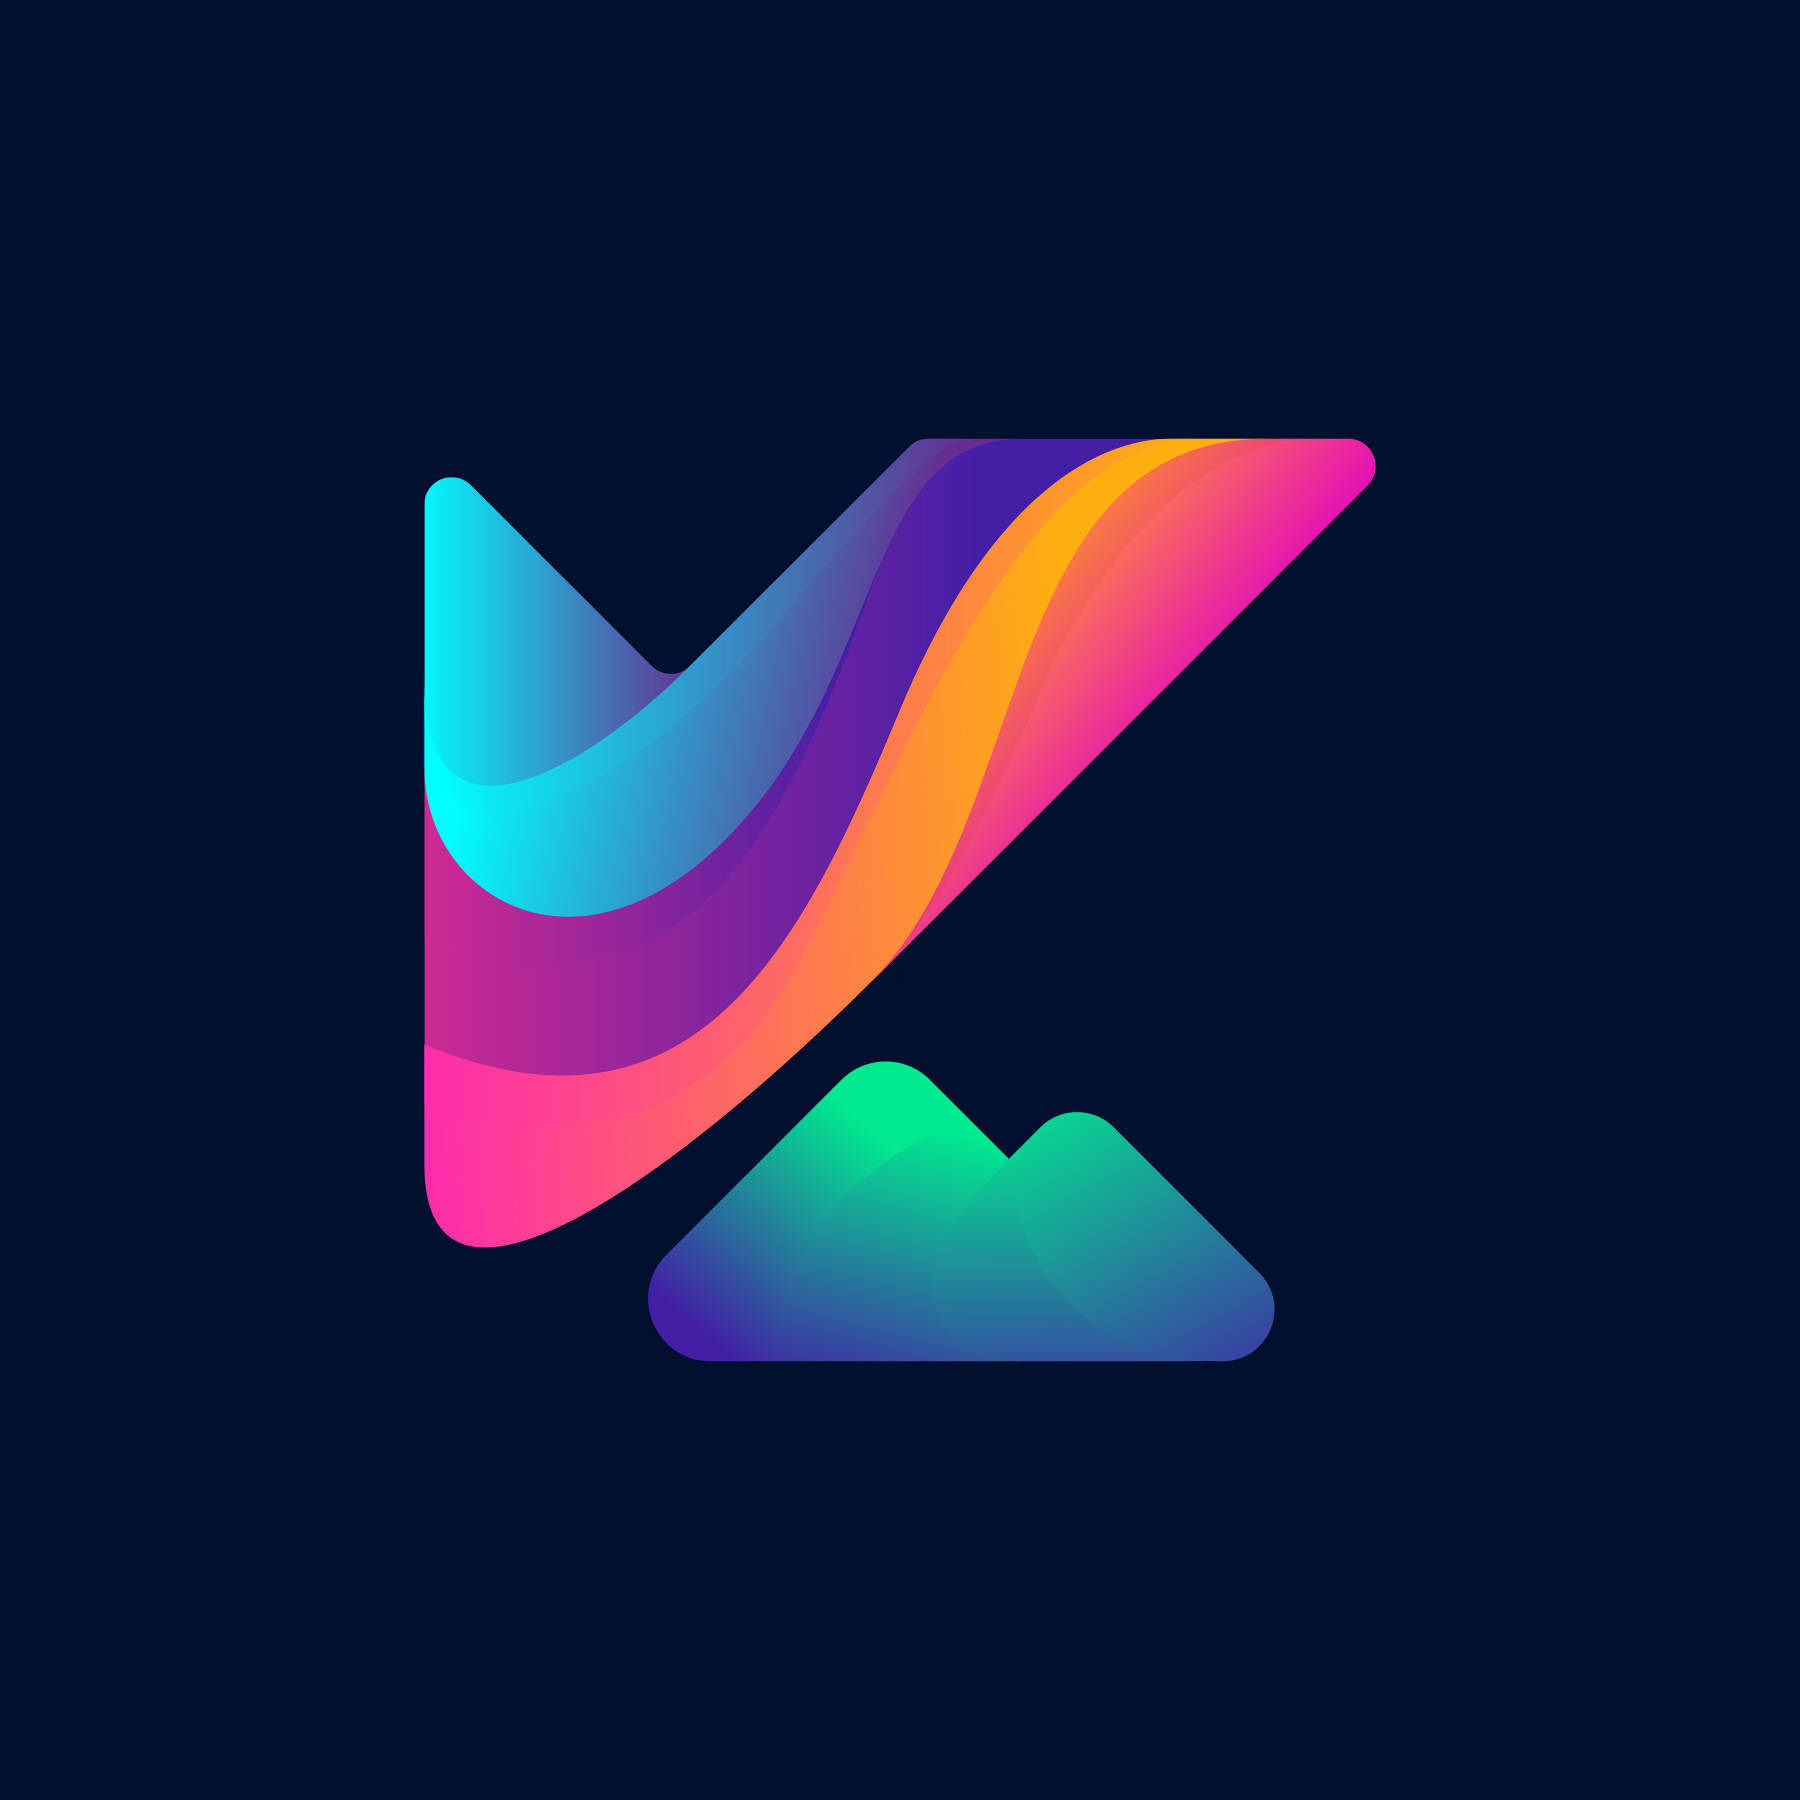 K Letter Logo logo design by logo designer Nazztudio for your inspiration and for the worlds largest logo competition